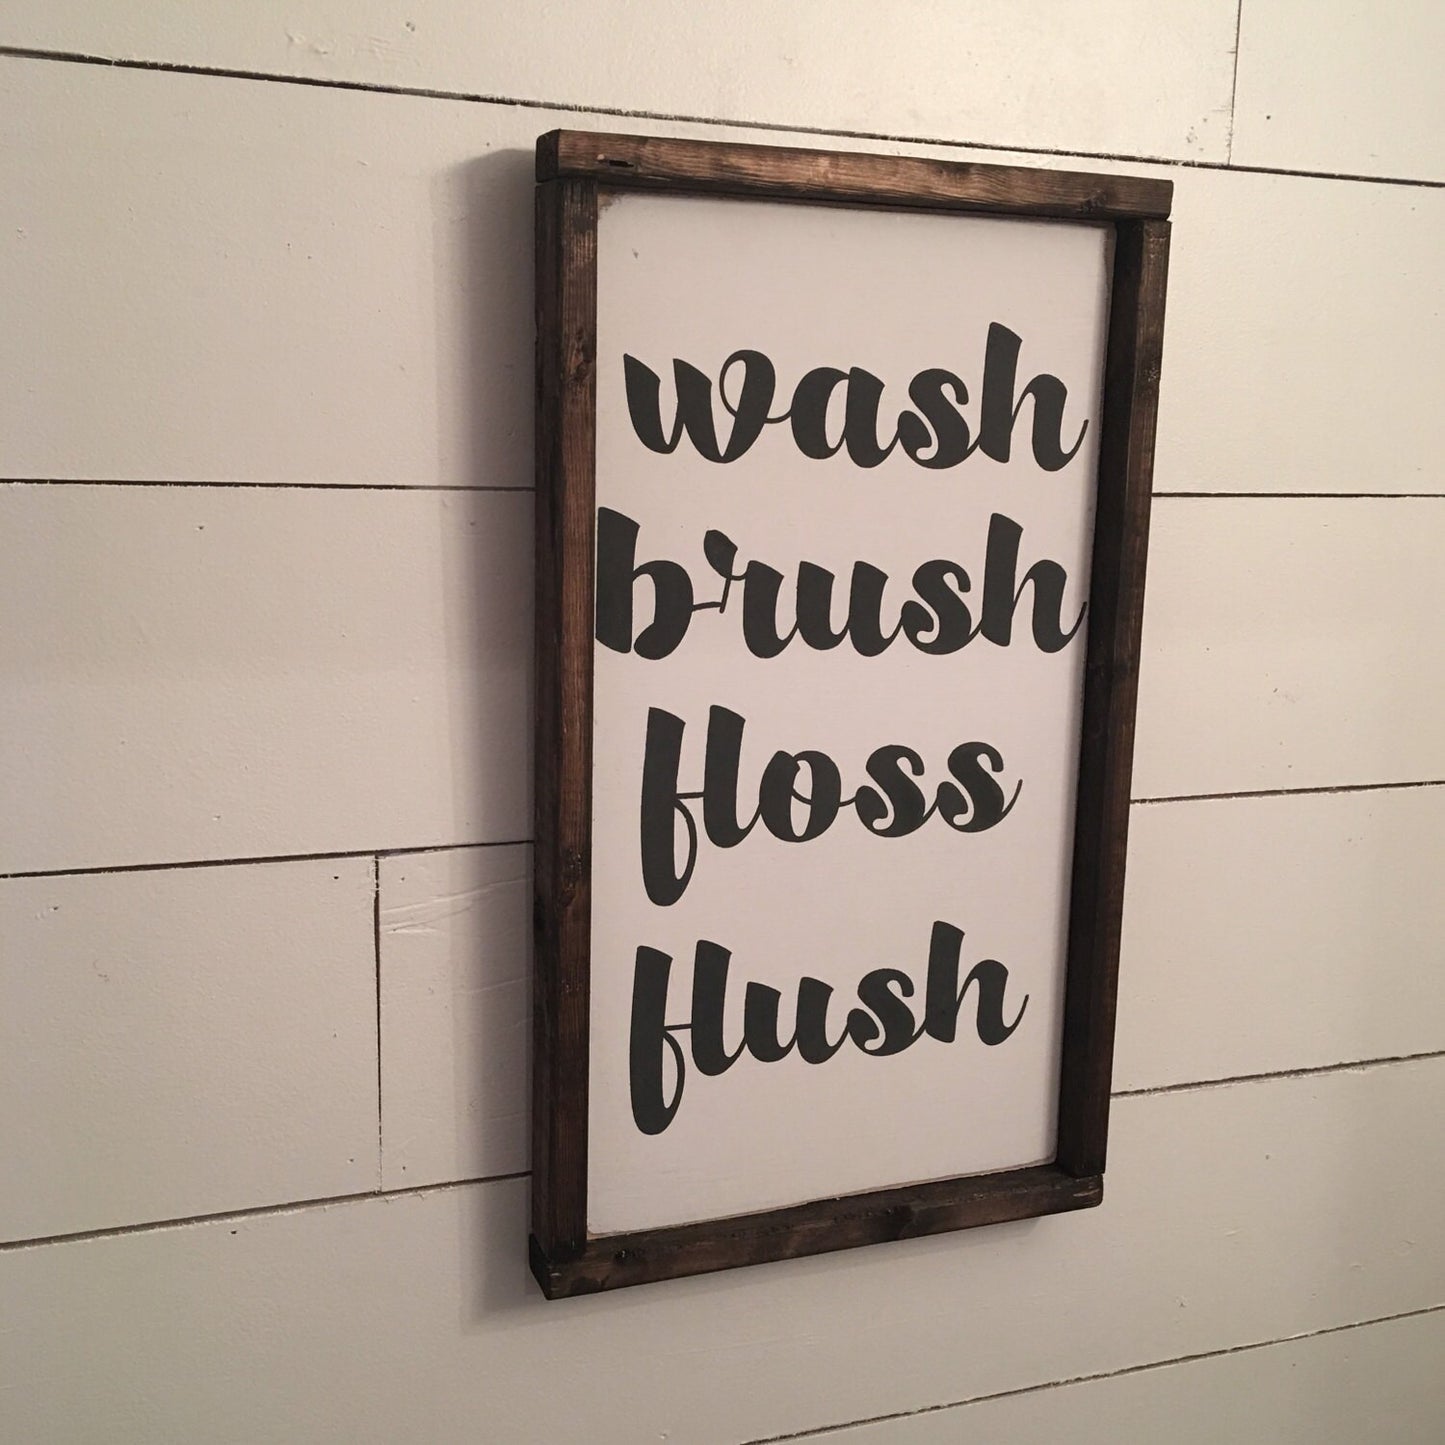 wash brush floss flush [FREE SHIPPING!]